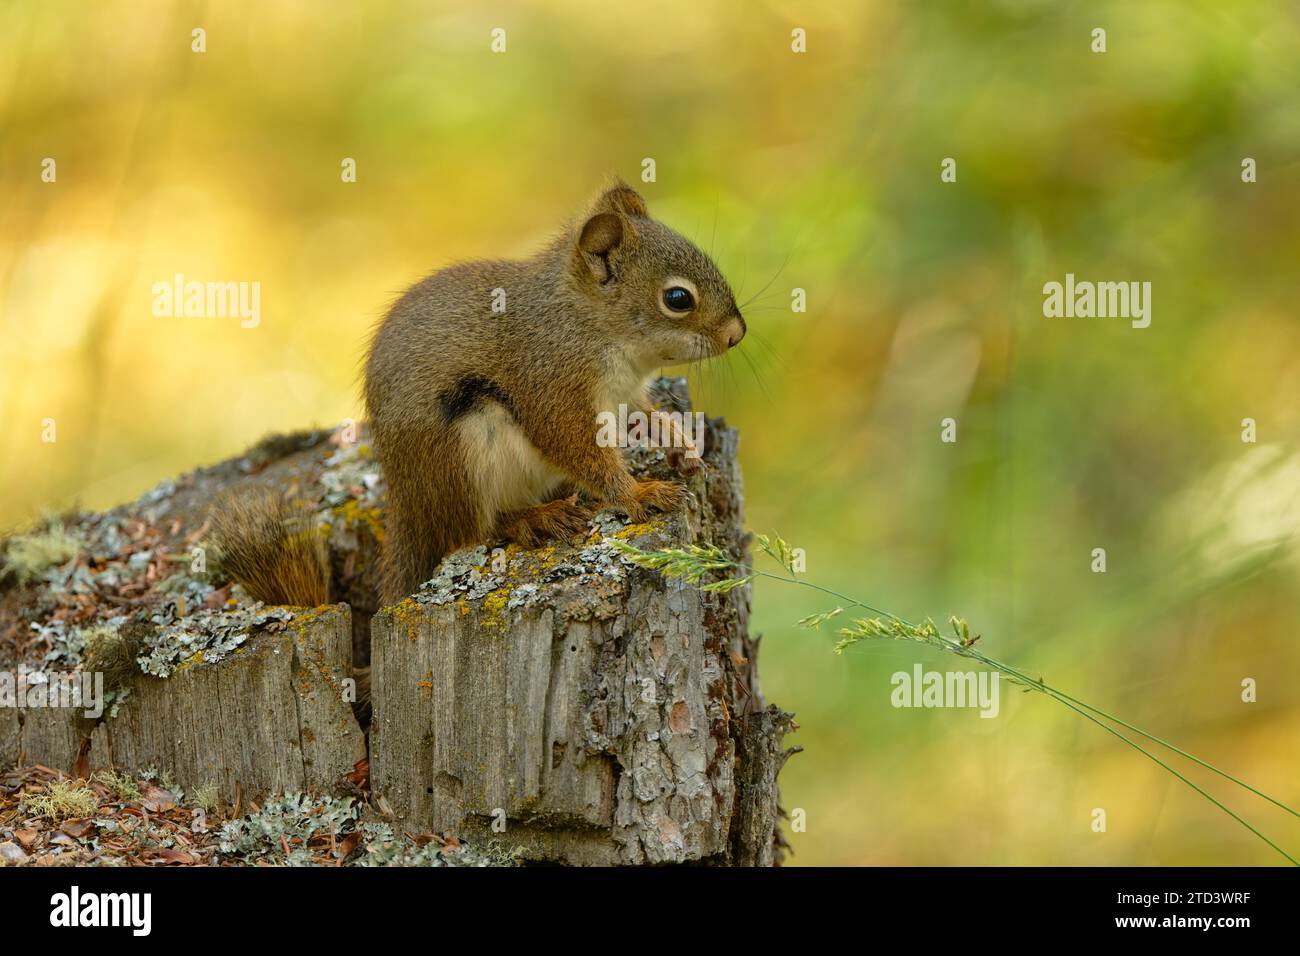 Common Canadian red squirrel (Tamiasciurus hudsonicus) sitting on tree stump, Yukon Territory, Canada Stock Photo